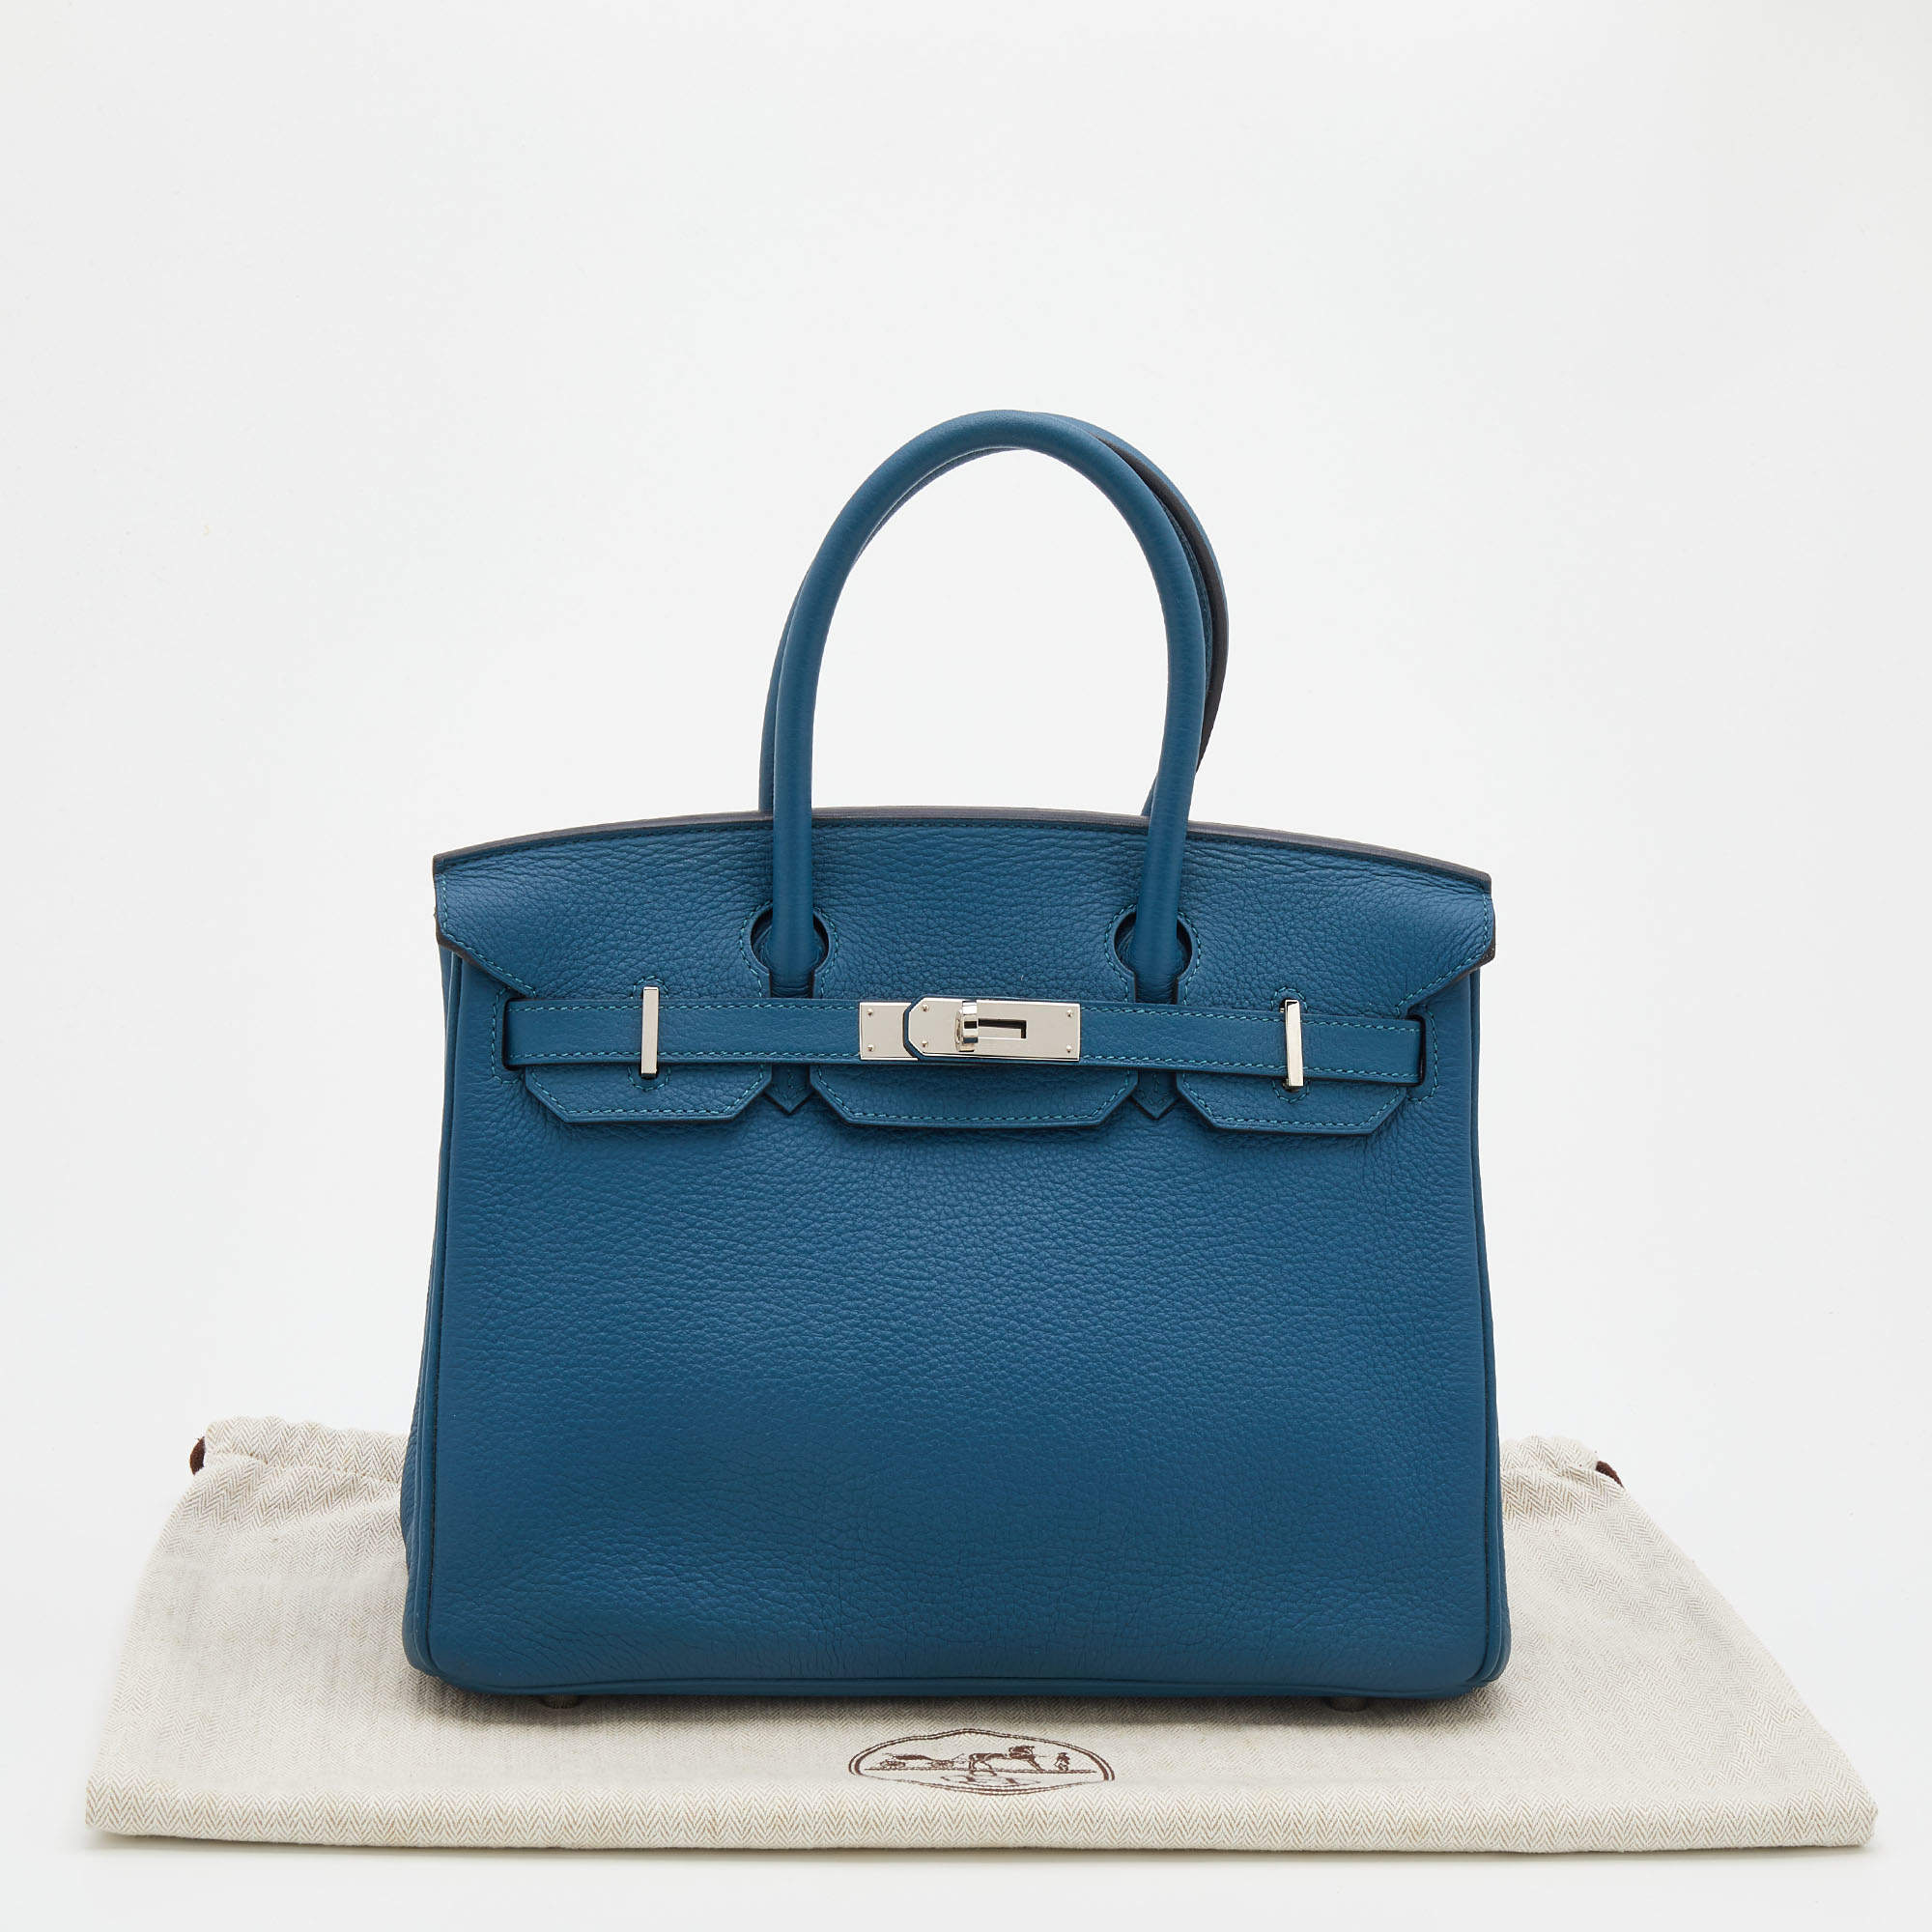 Hermès Cobalt Togo Leather Palladium Plated Birkin 30 Bag Hermes